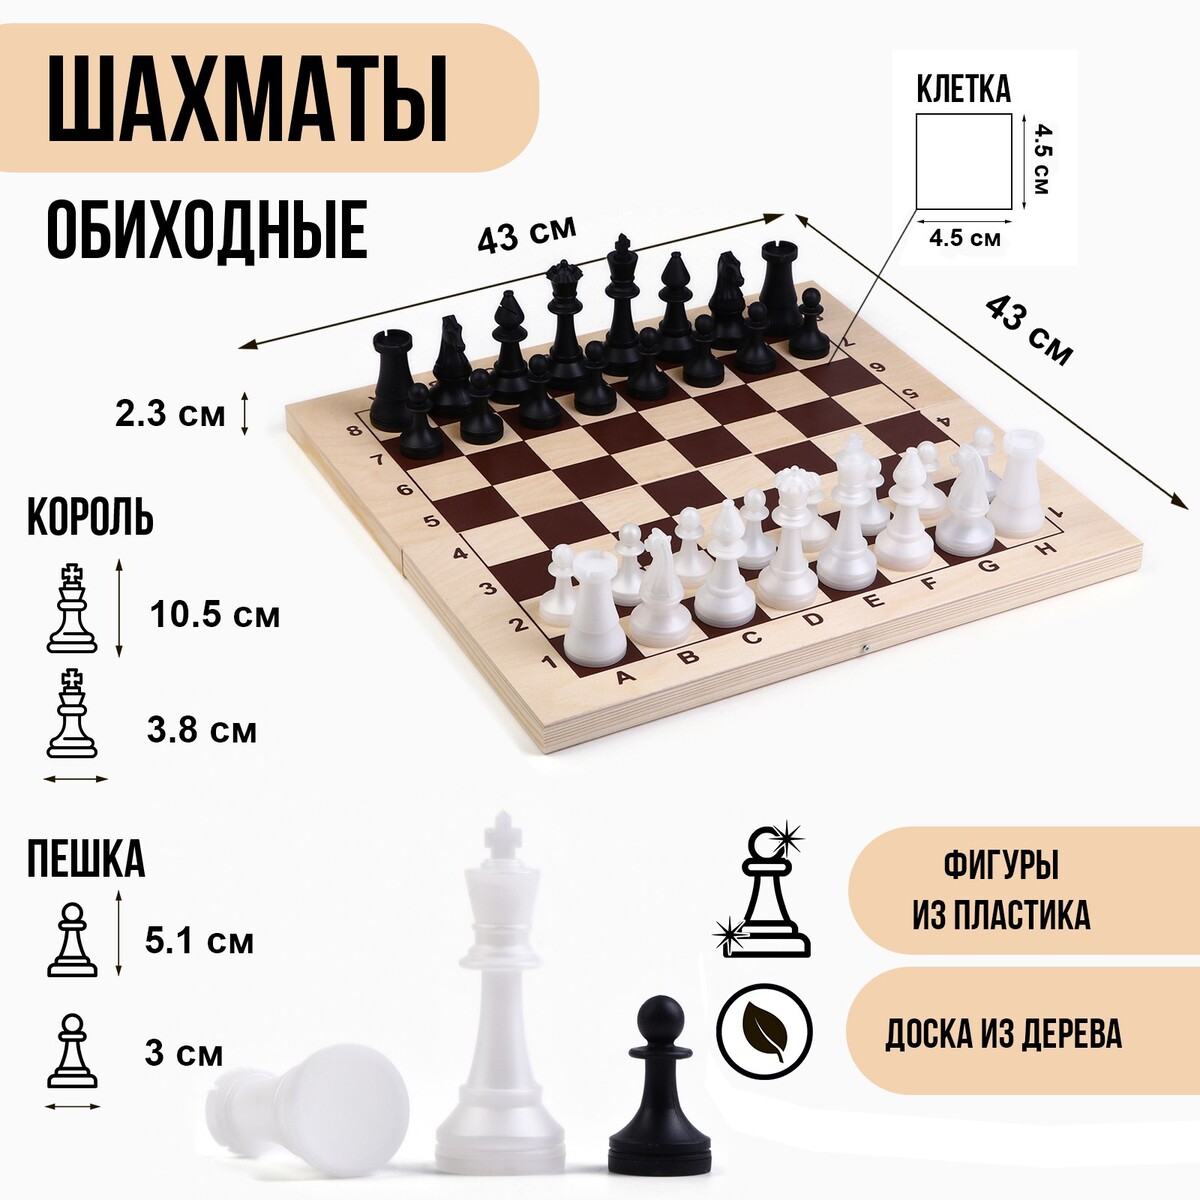 Шахматы гроссмейстерские, турнирные 43 х 43 см, фигуры пластик, король 10.5 см, пешка 5 см шахматные фигуры пластик король h 9 5 см пешка h 4 5 см